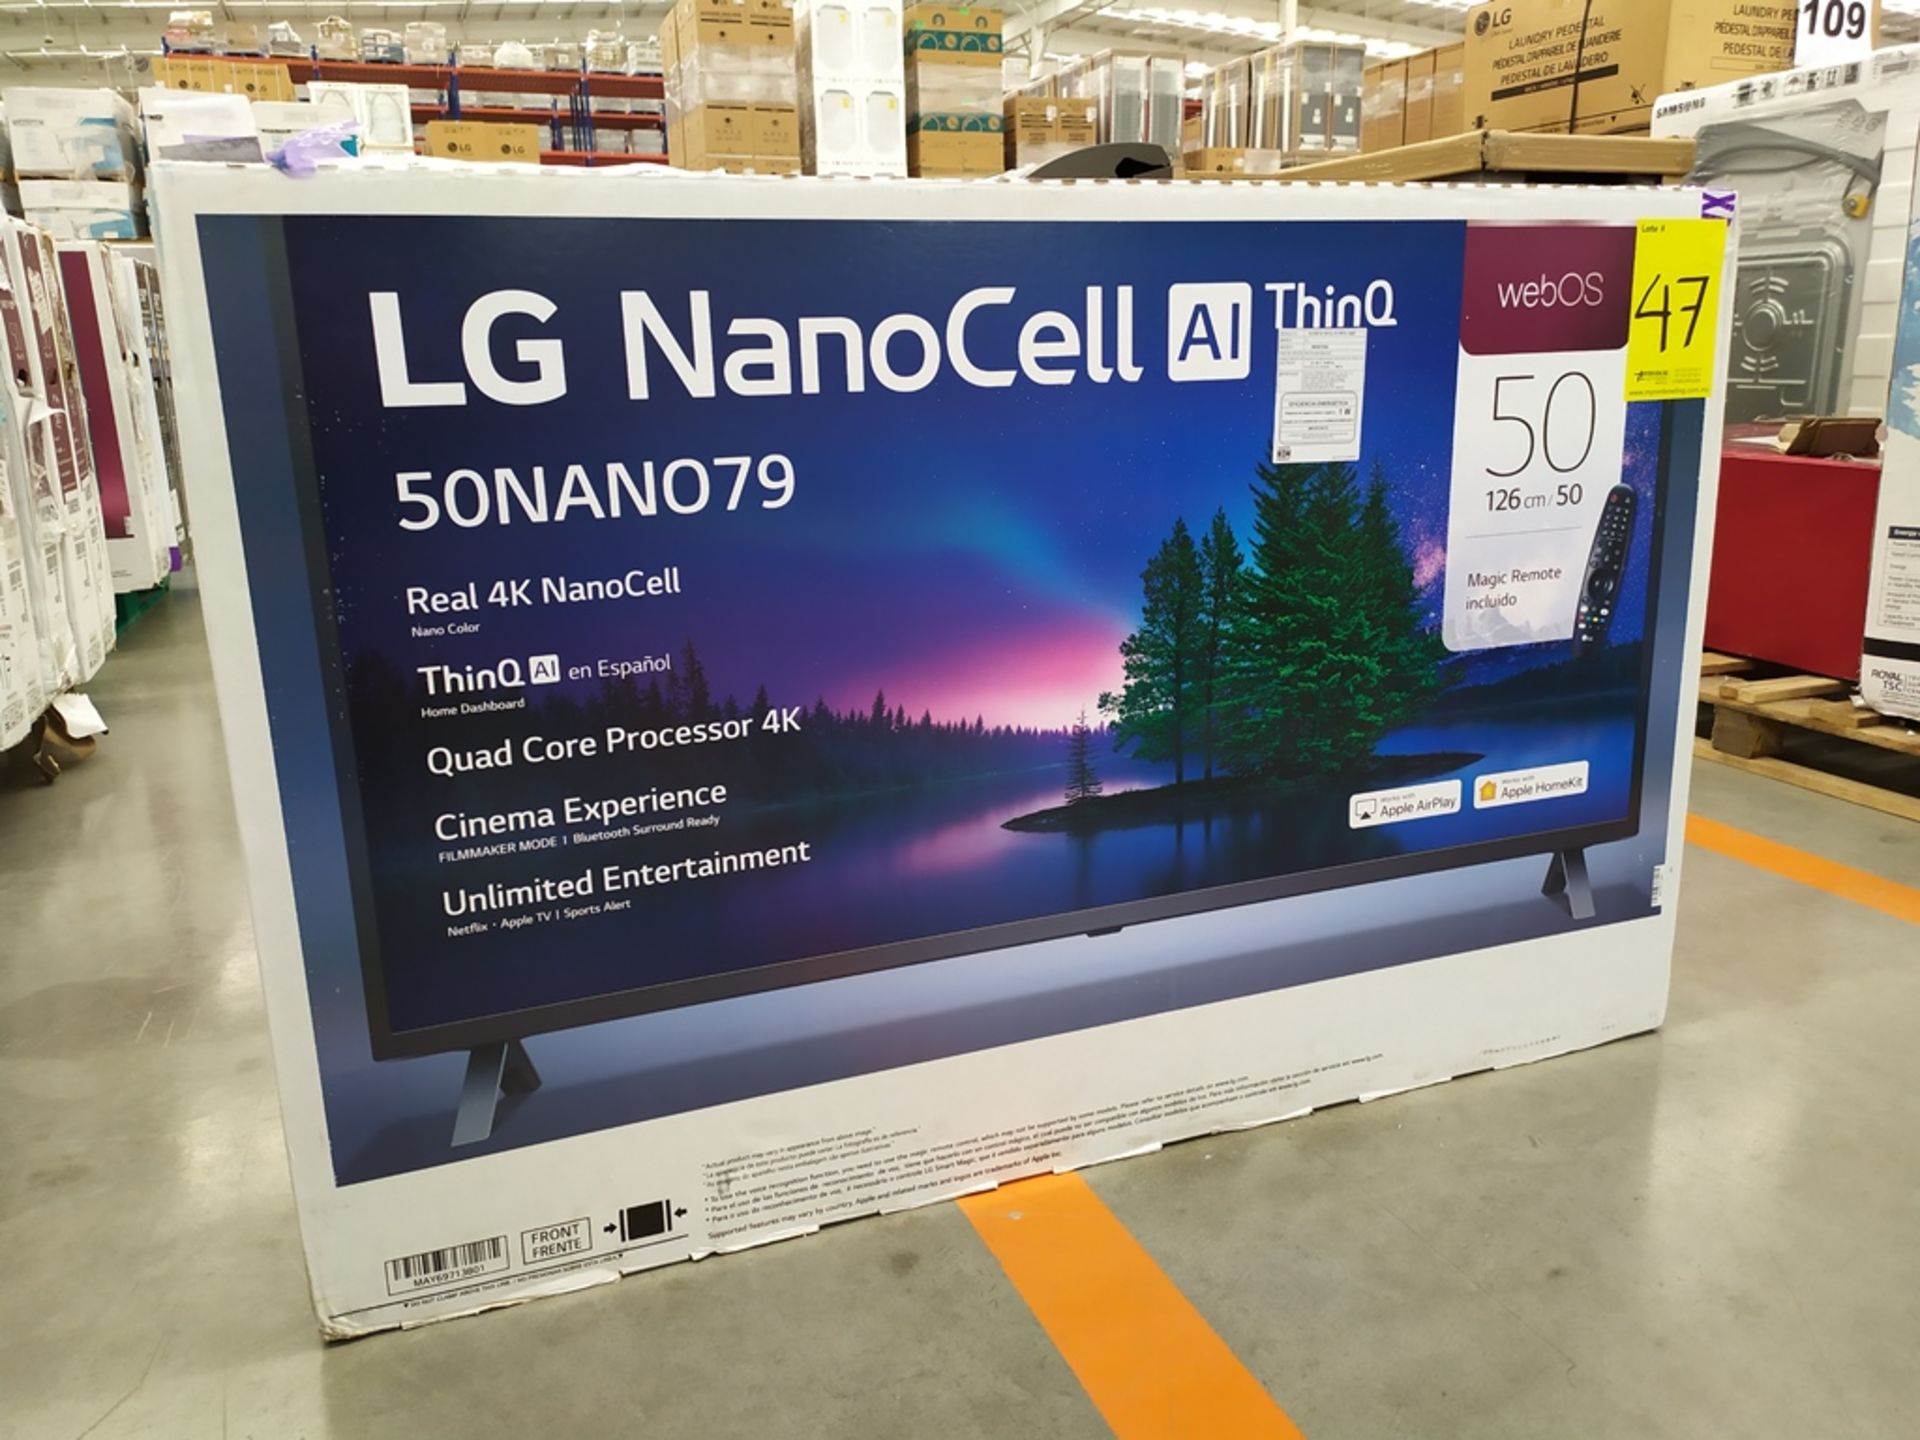 Pantalla Smart TV Marca LG De 50" Nanocell Modelo 50NAN079 No De Serie 104MXAY41208 - Image 6 of 9